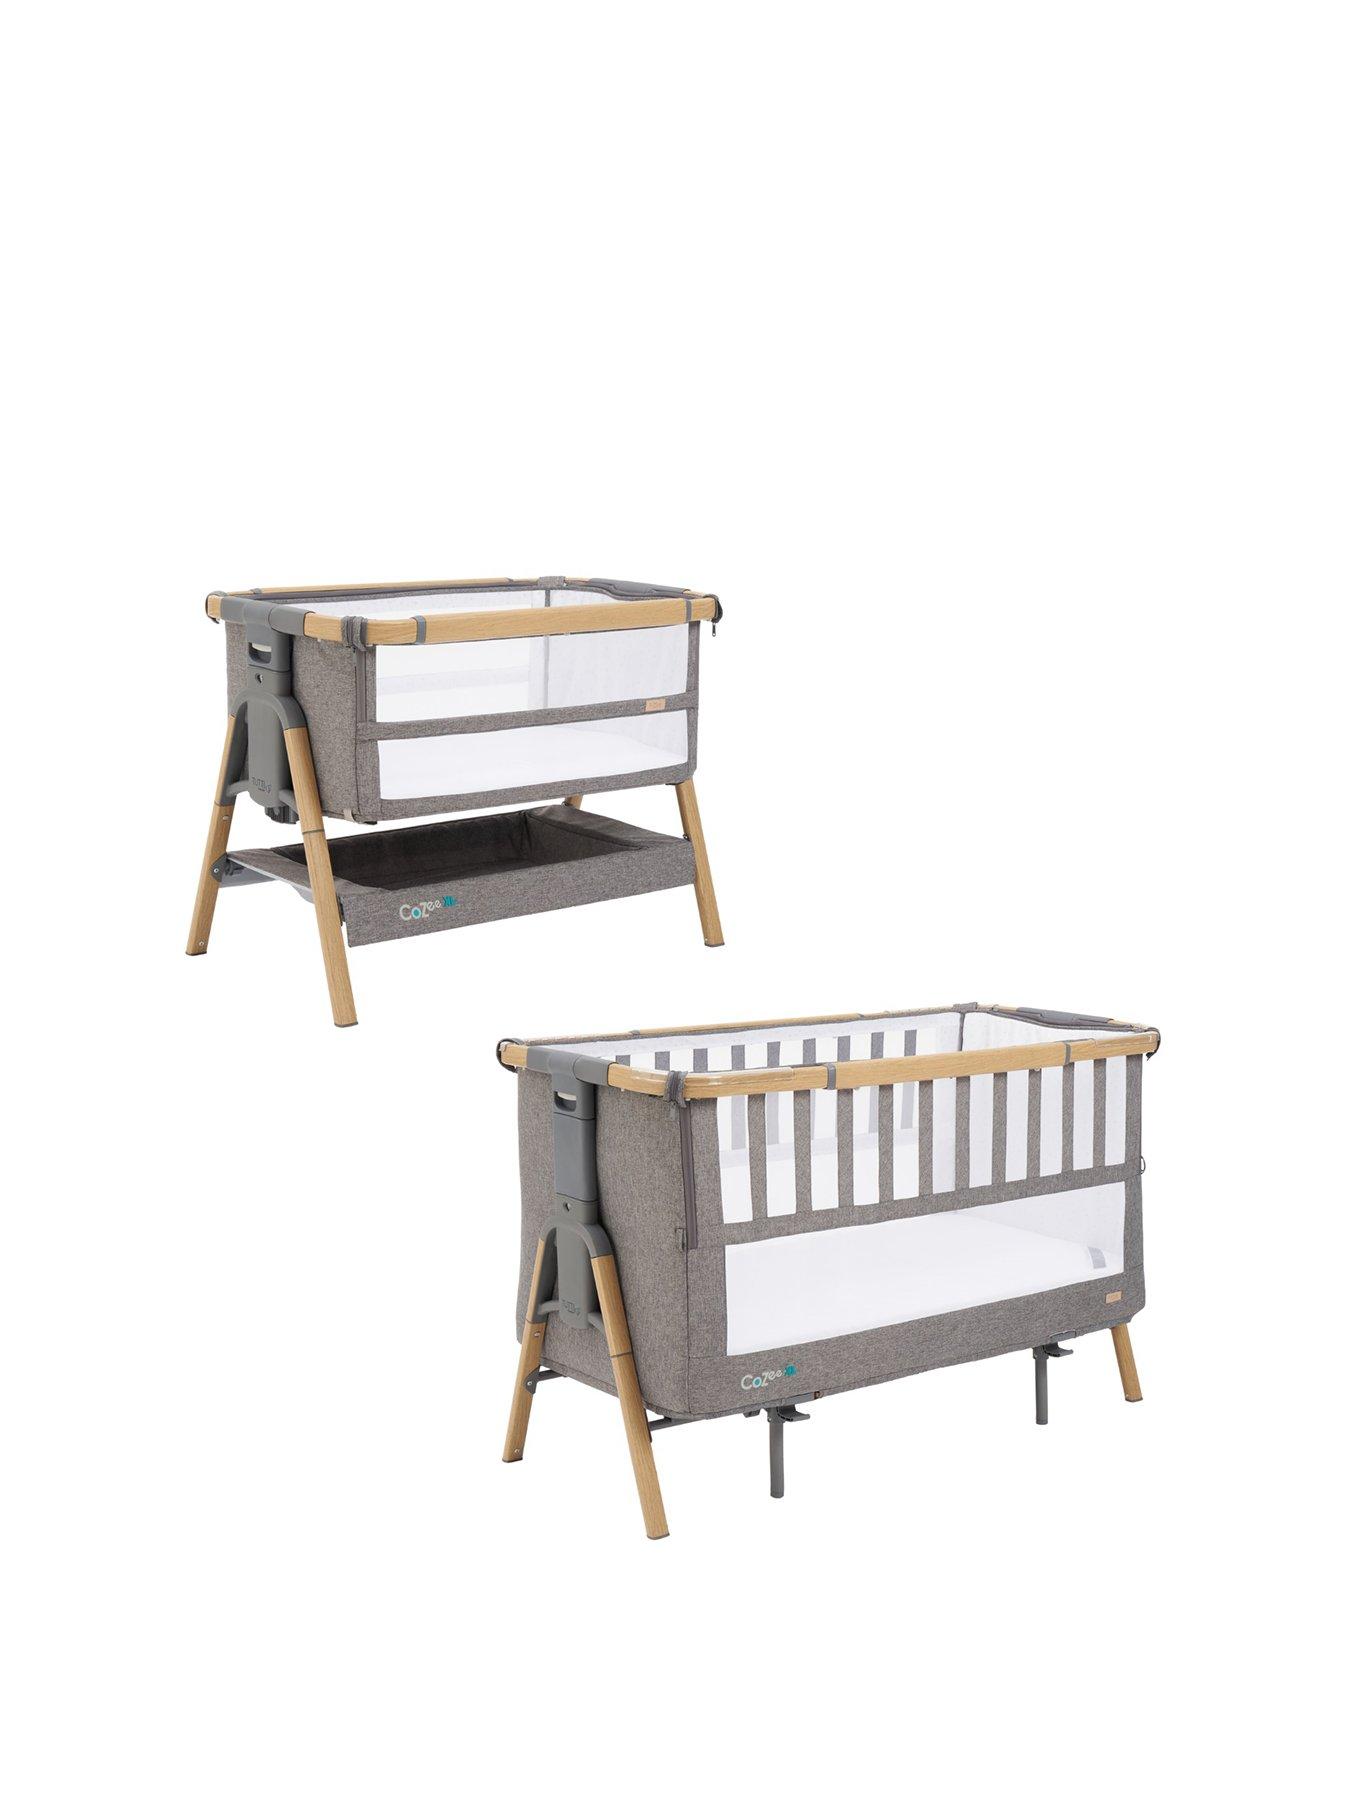 Tutti Bambini Cozee Xl Bedside Crib  Cot - Oak / Charcoal